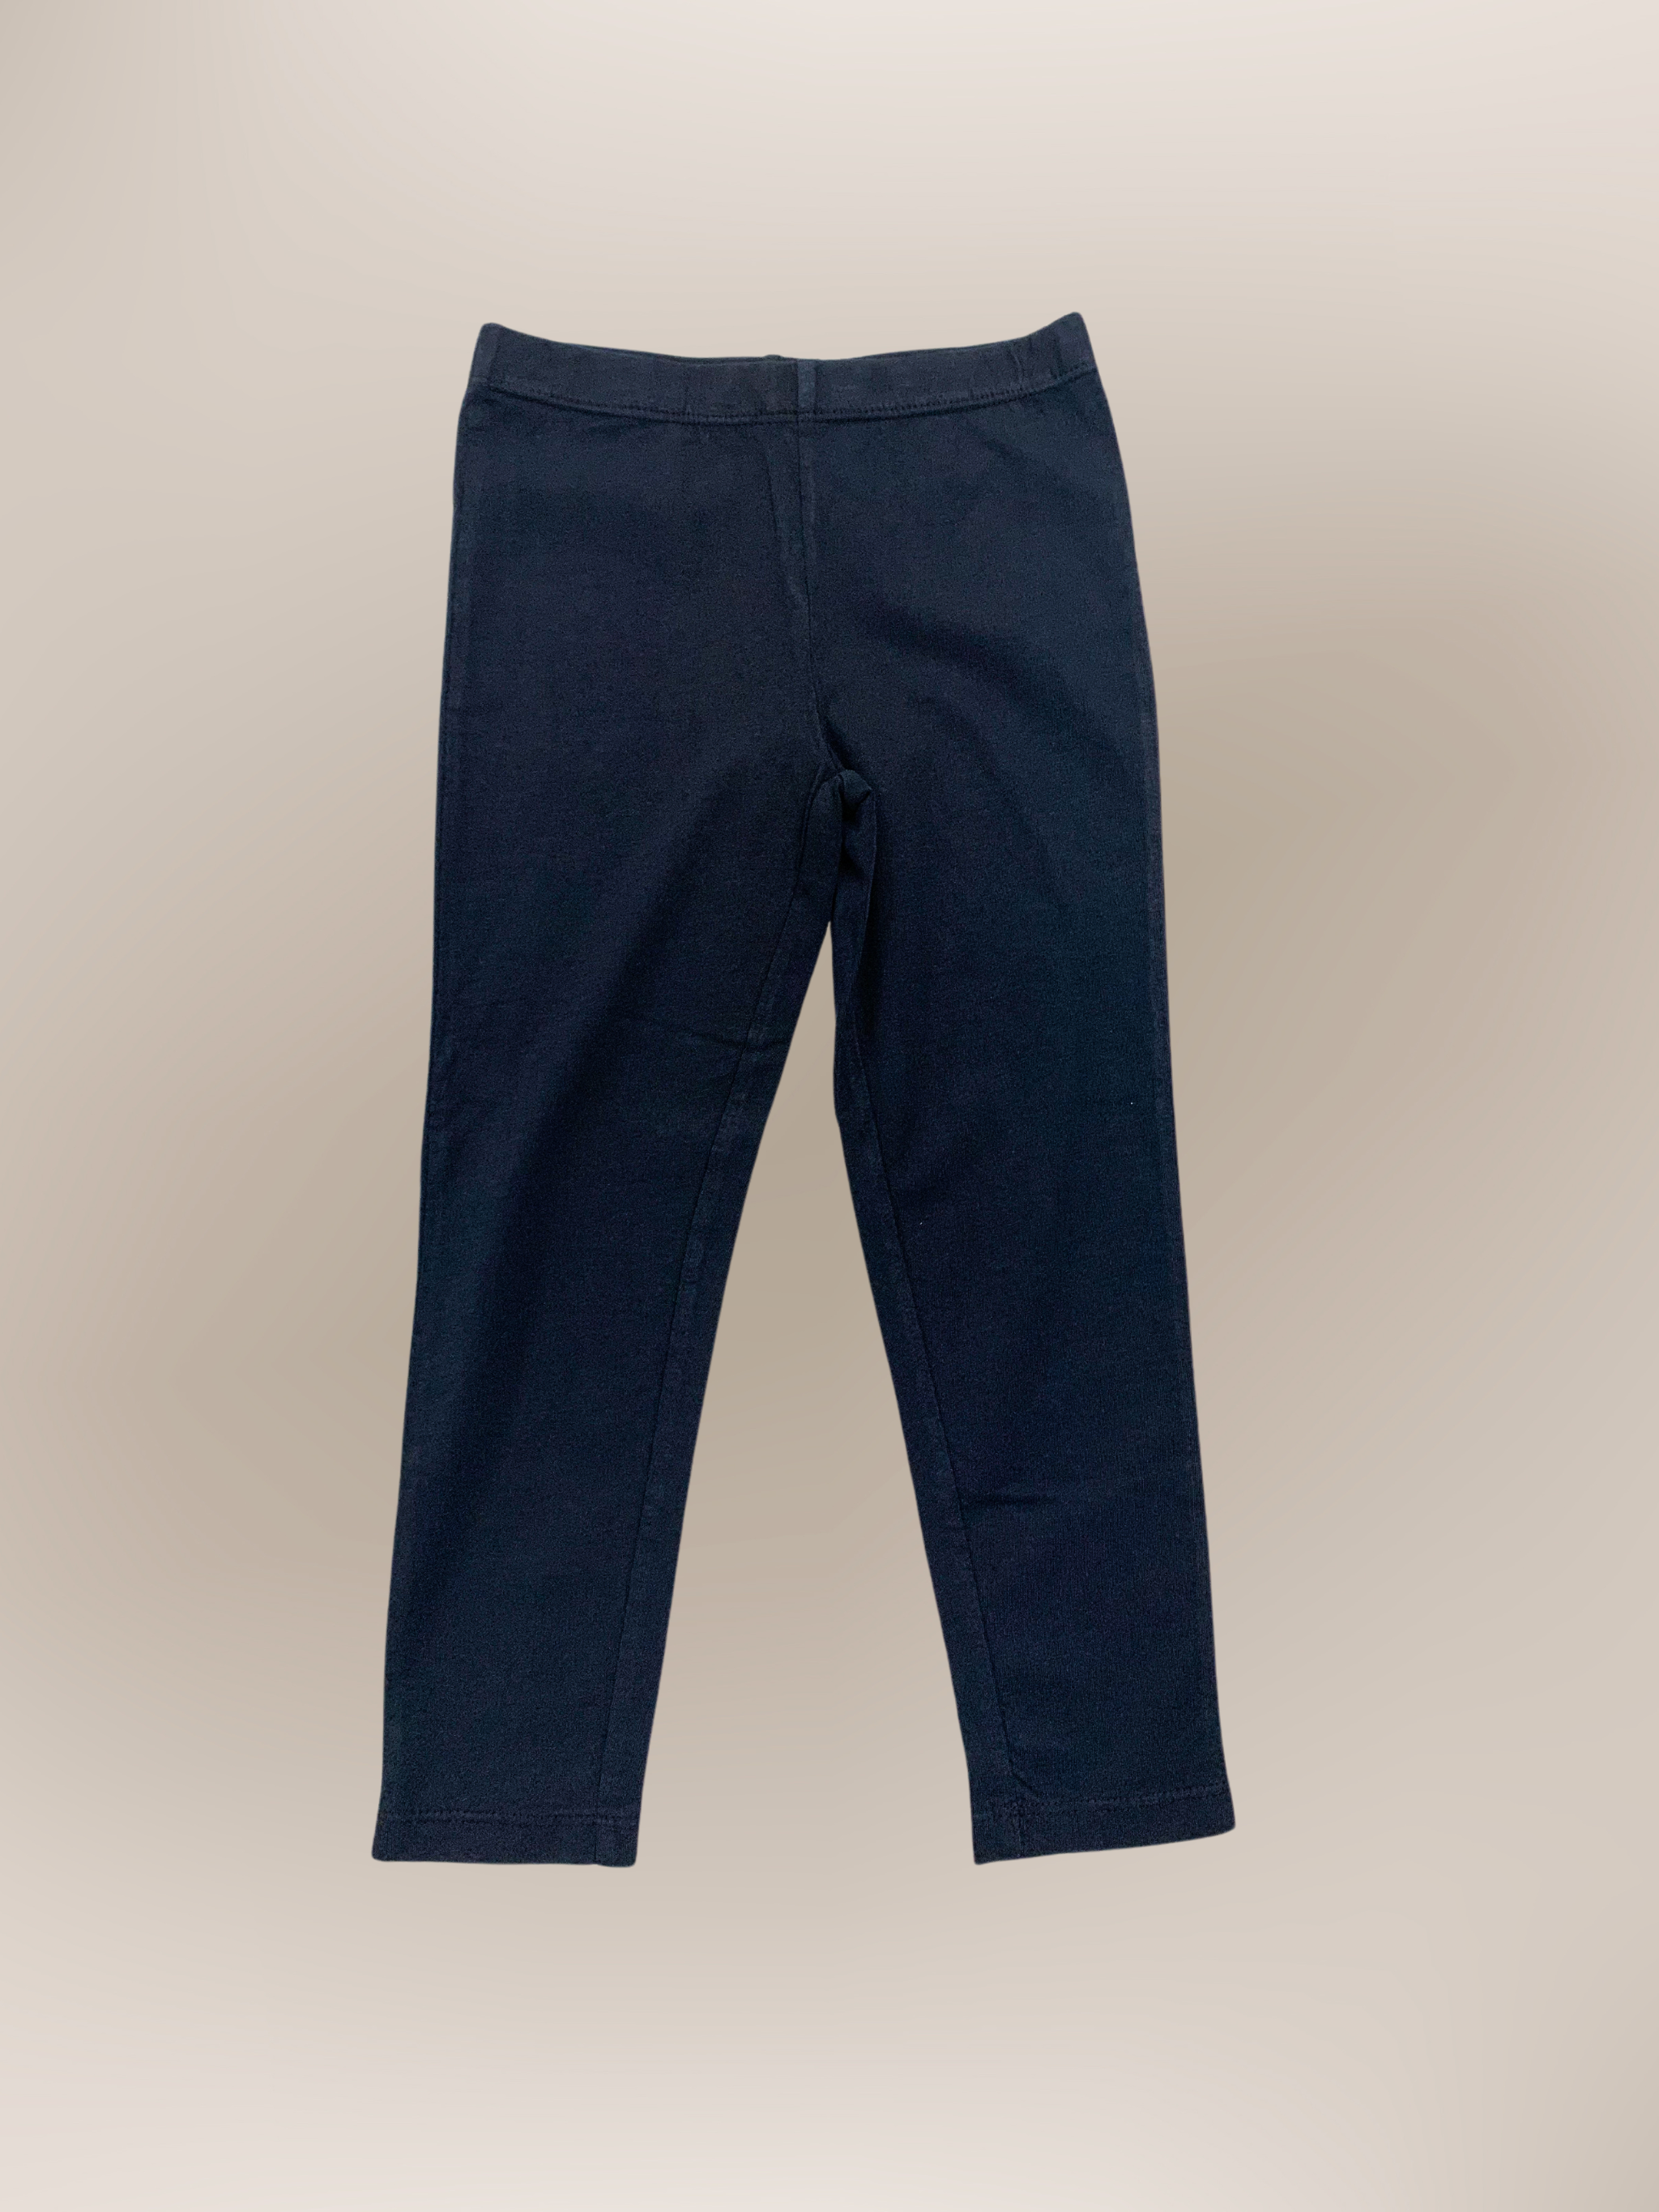 Lou & Grey Blue Active Pants, Tights & Leggings